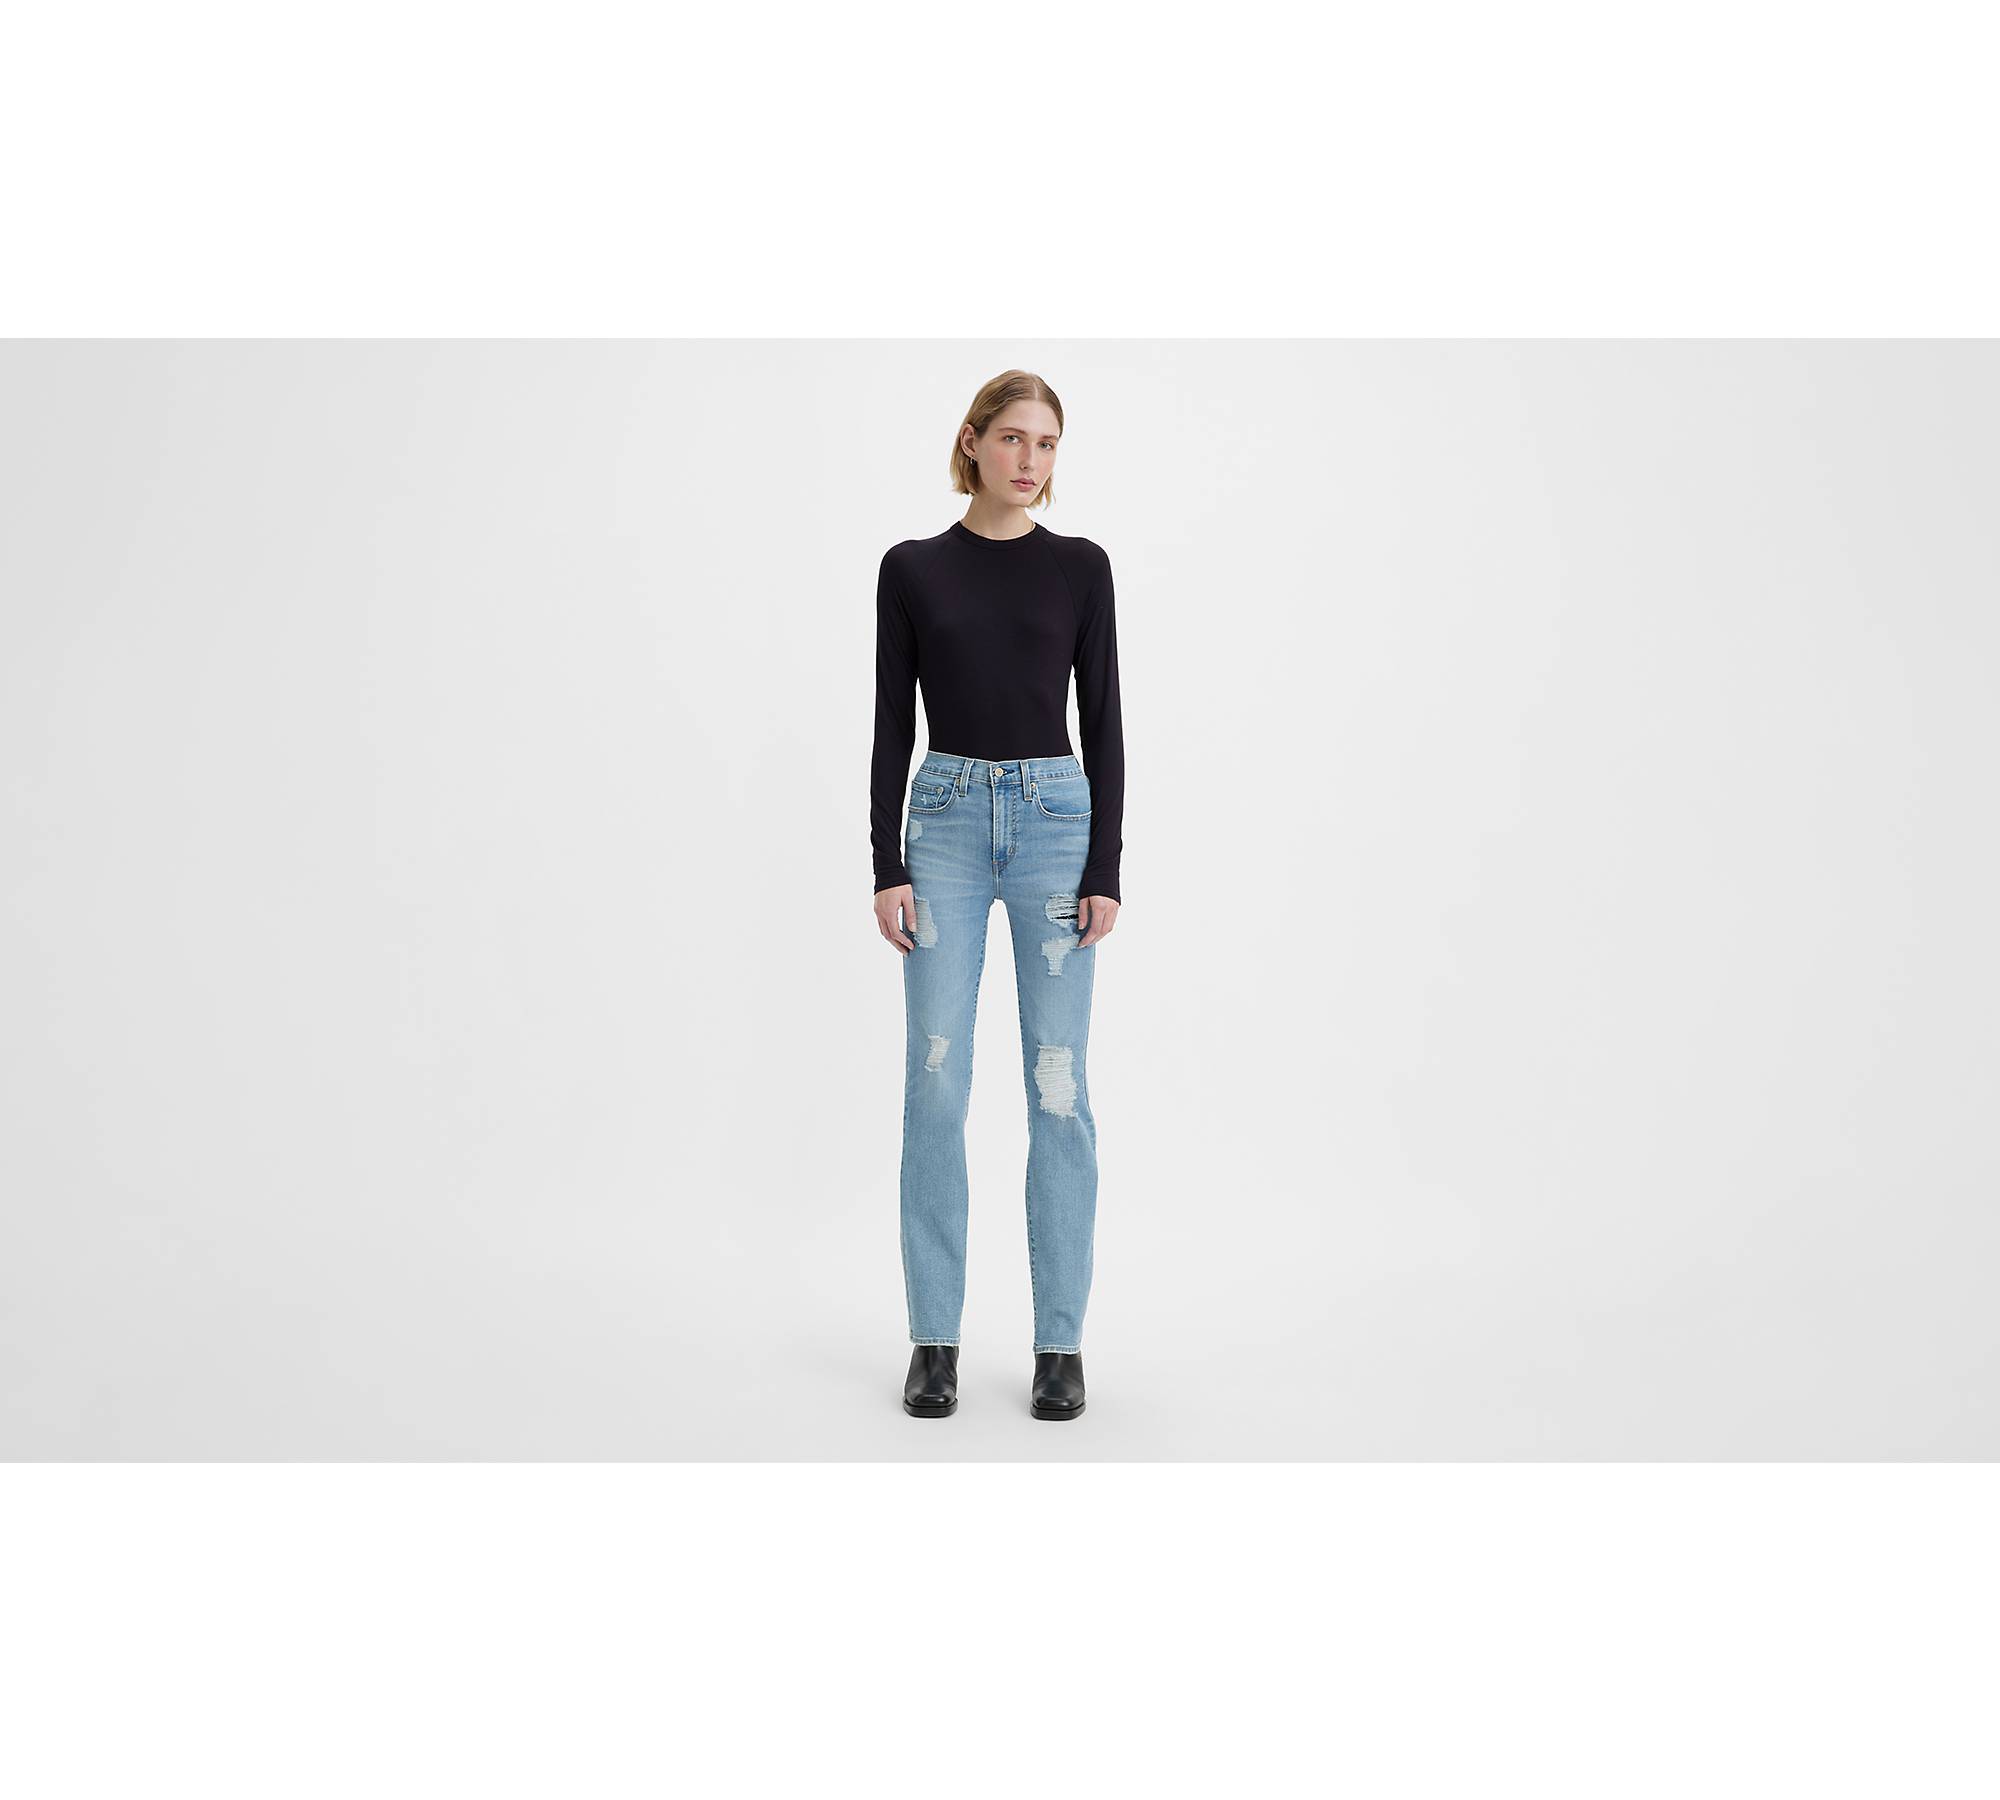 Zara Jeans Vintage Skinny High Rise Ankle Denim Women's Size 8